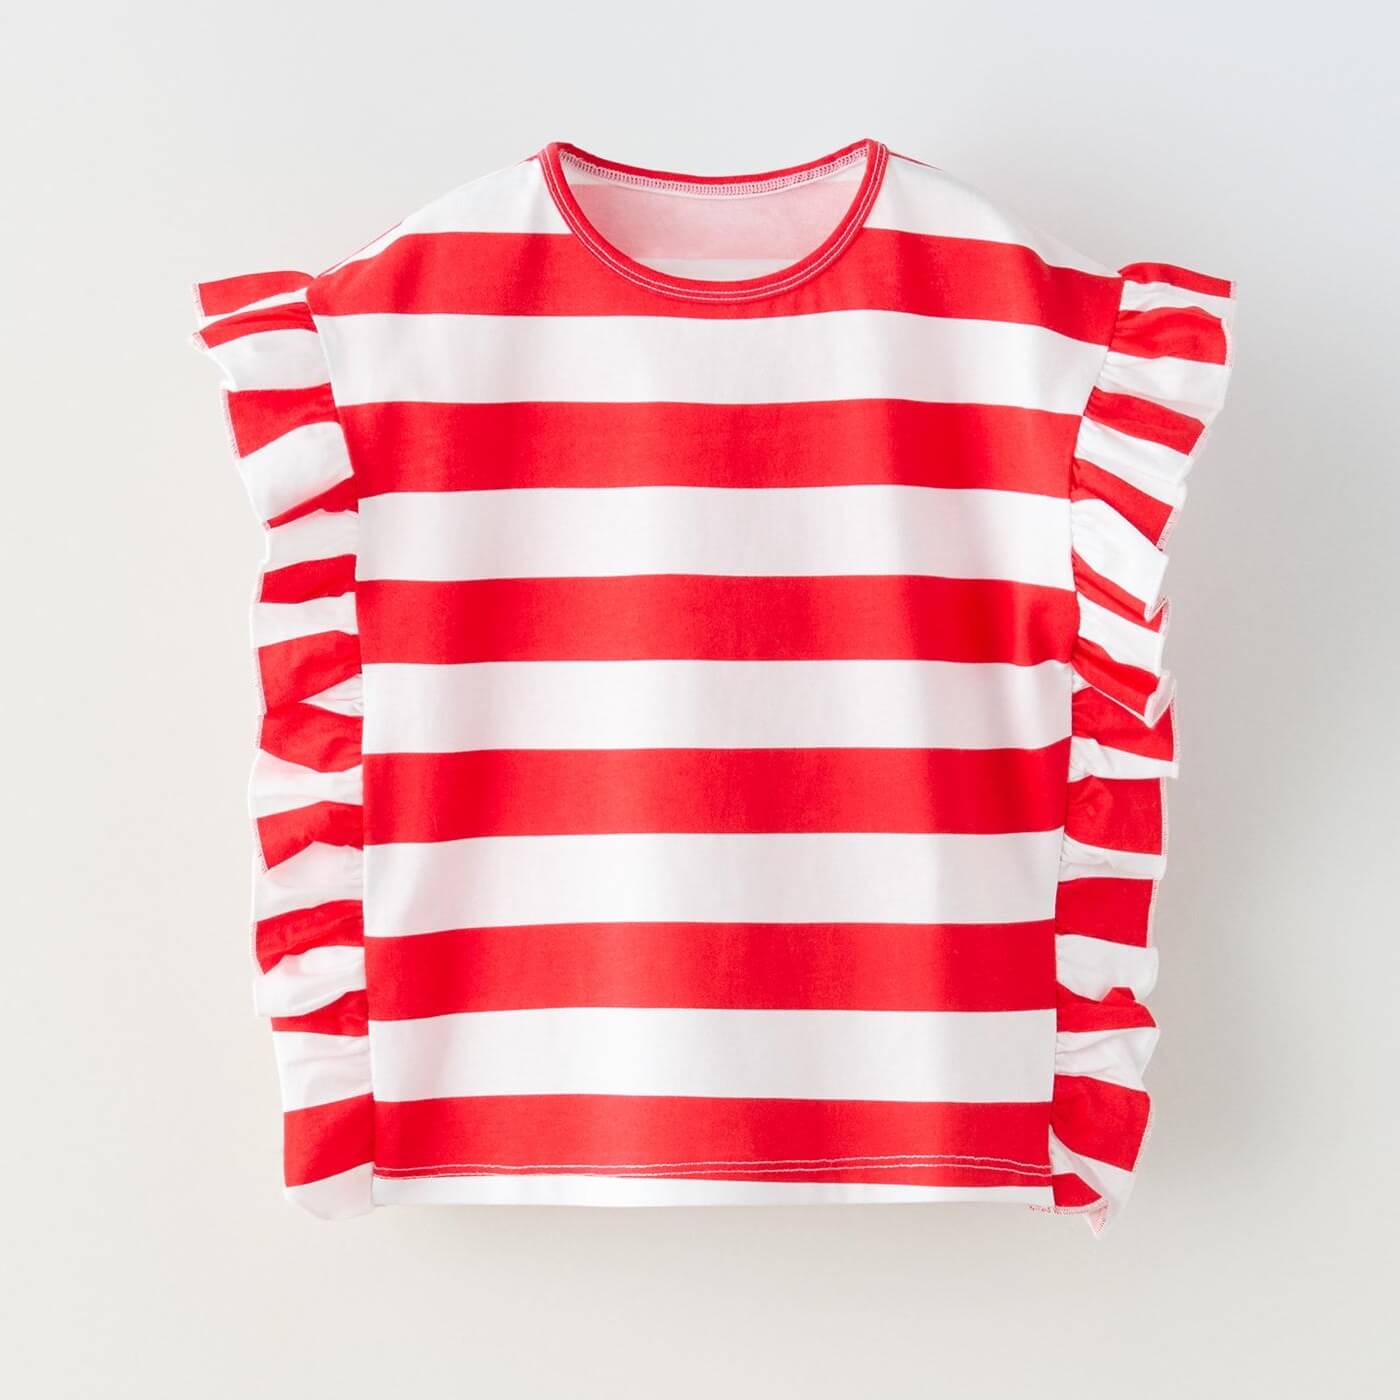 Футболка Zara Striped With Ruffle Trims, красный/белый футболка zara with contrast trims белый зеленый